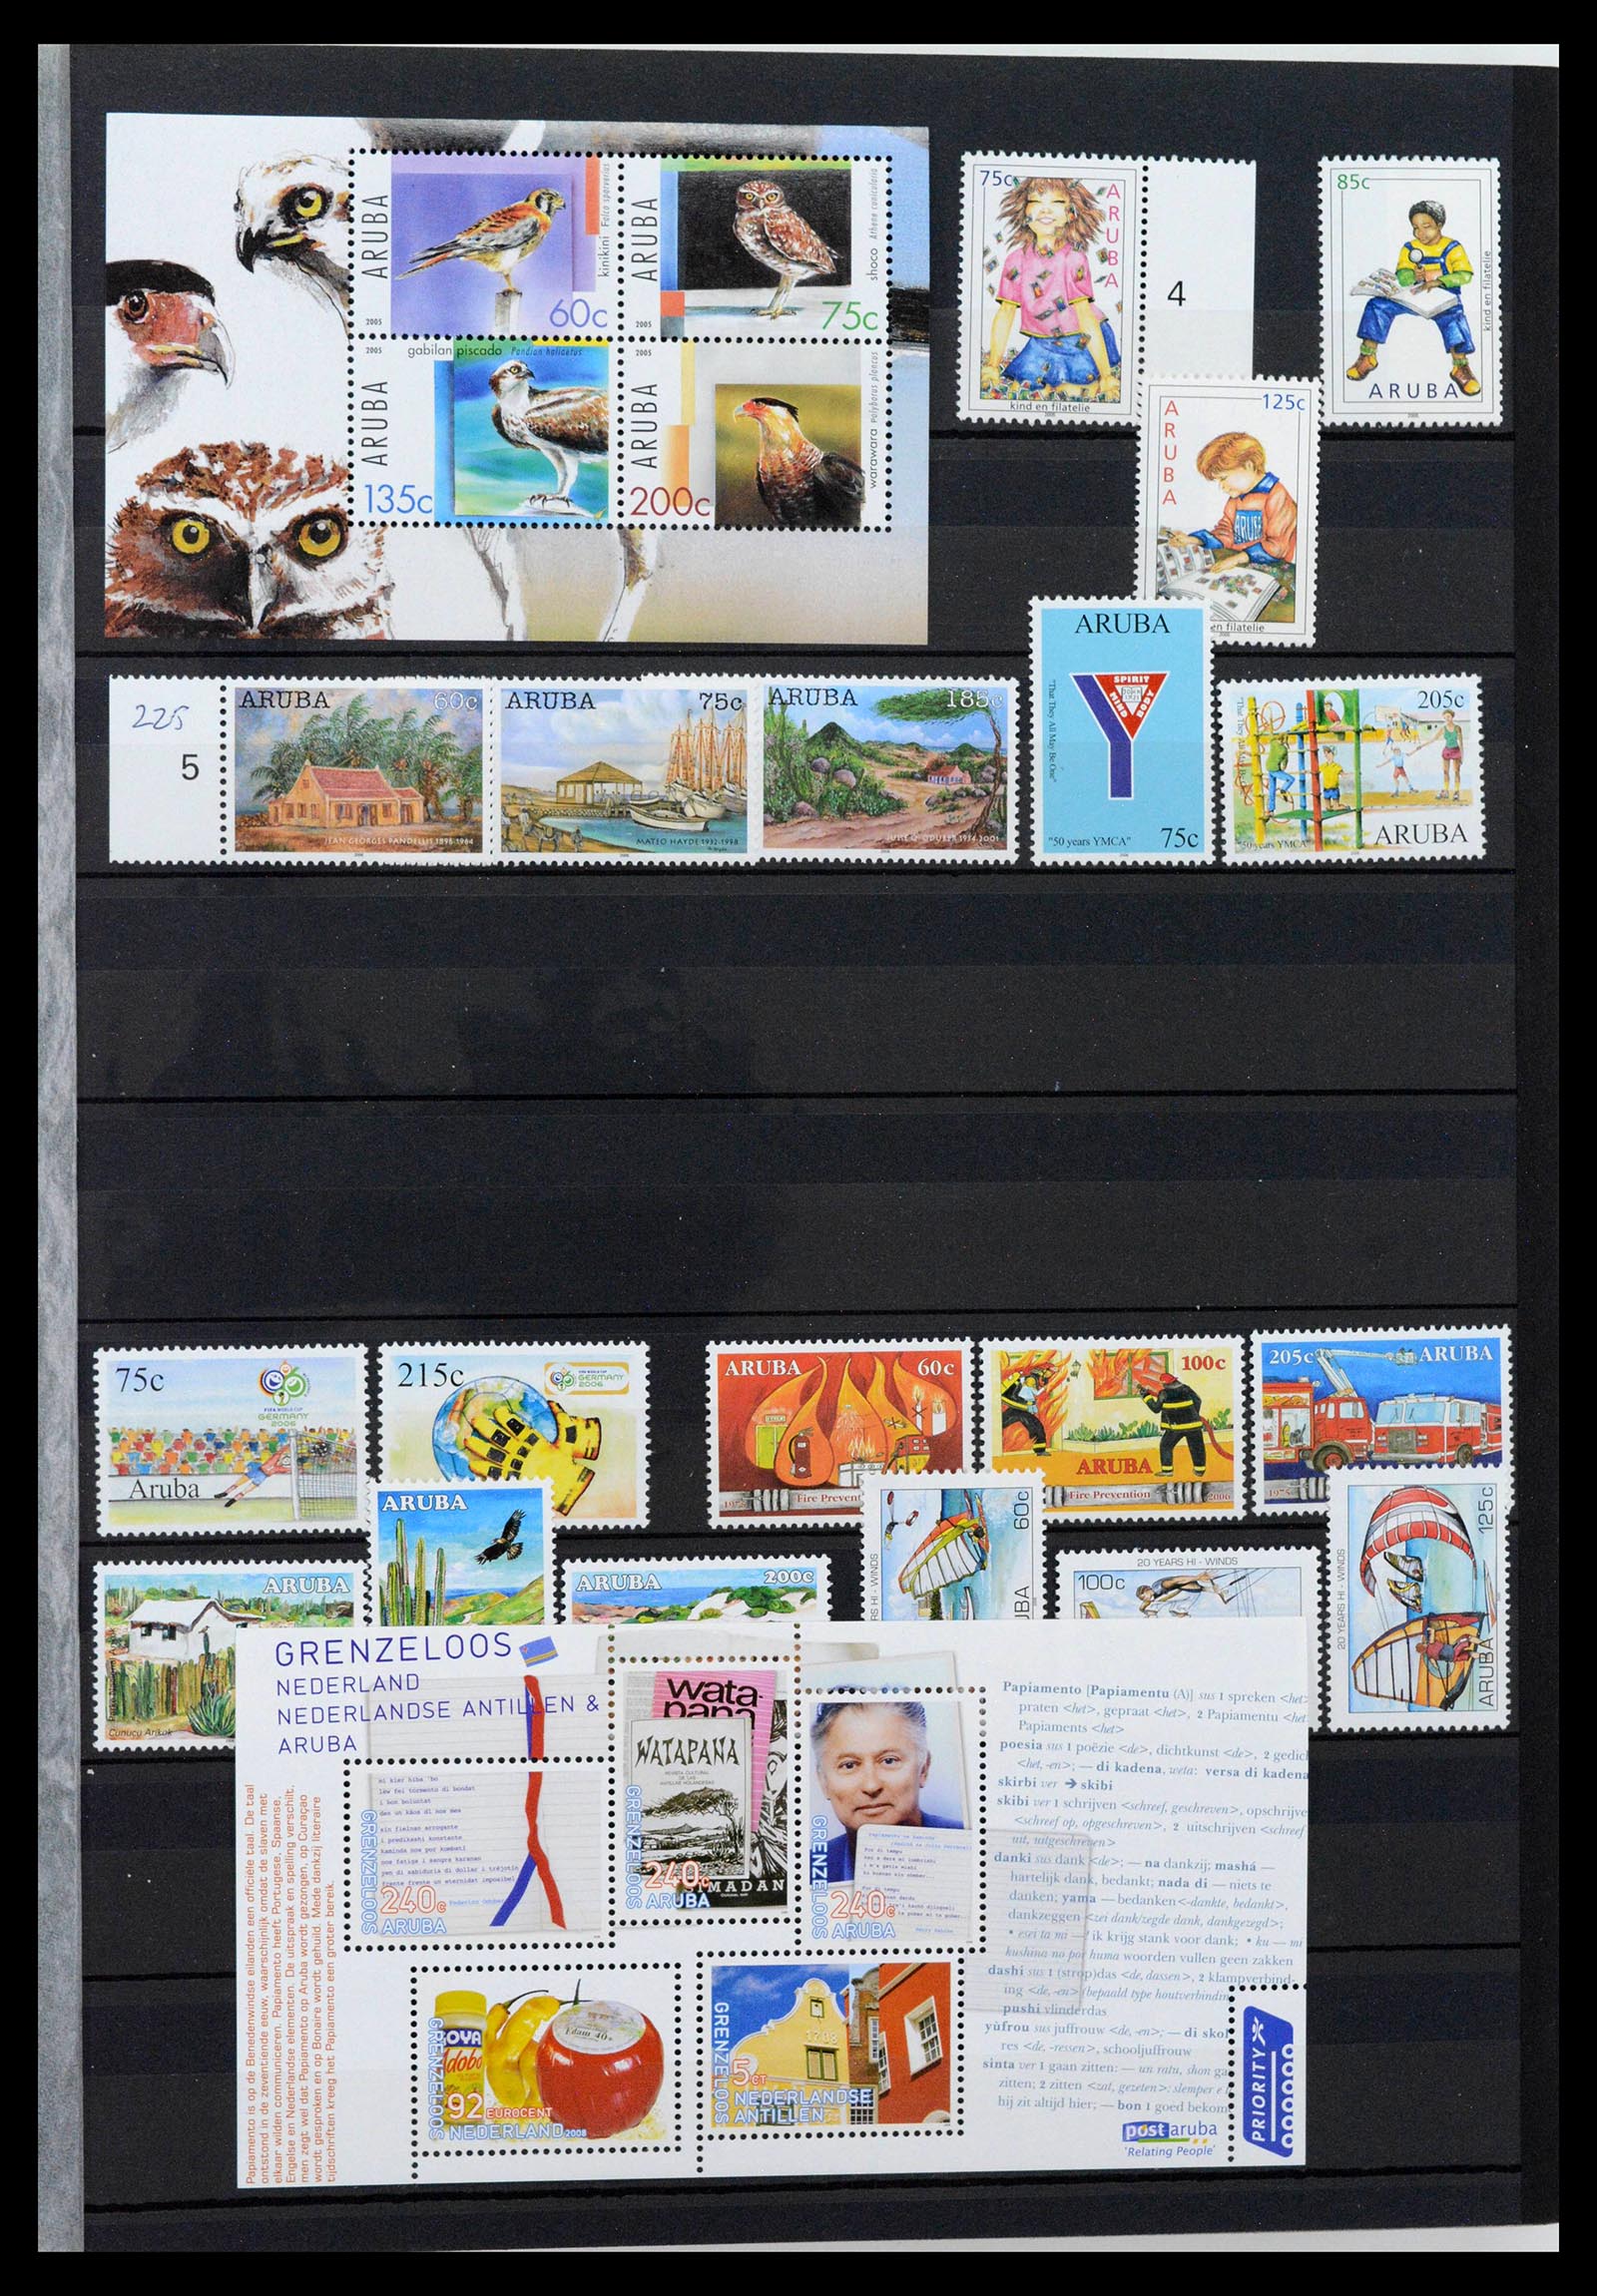 39027 0013 - Stamp collection 39027 Curaçao/Antilles/Aruba 1873-2009.